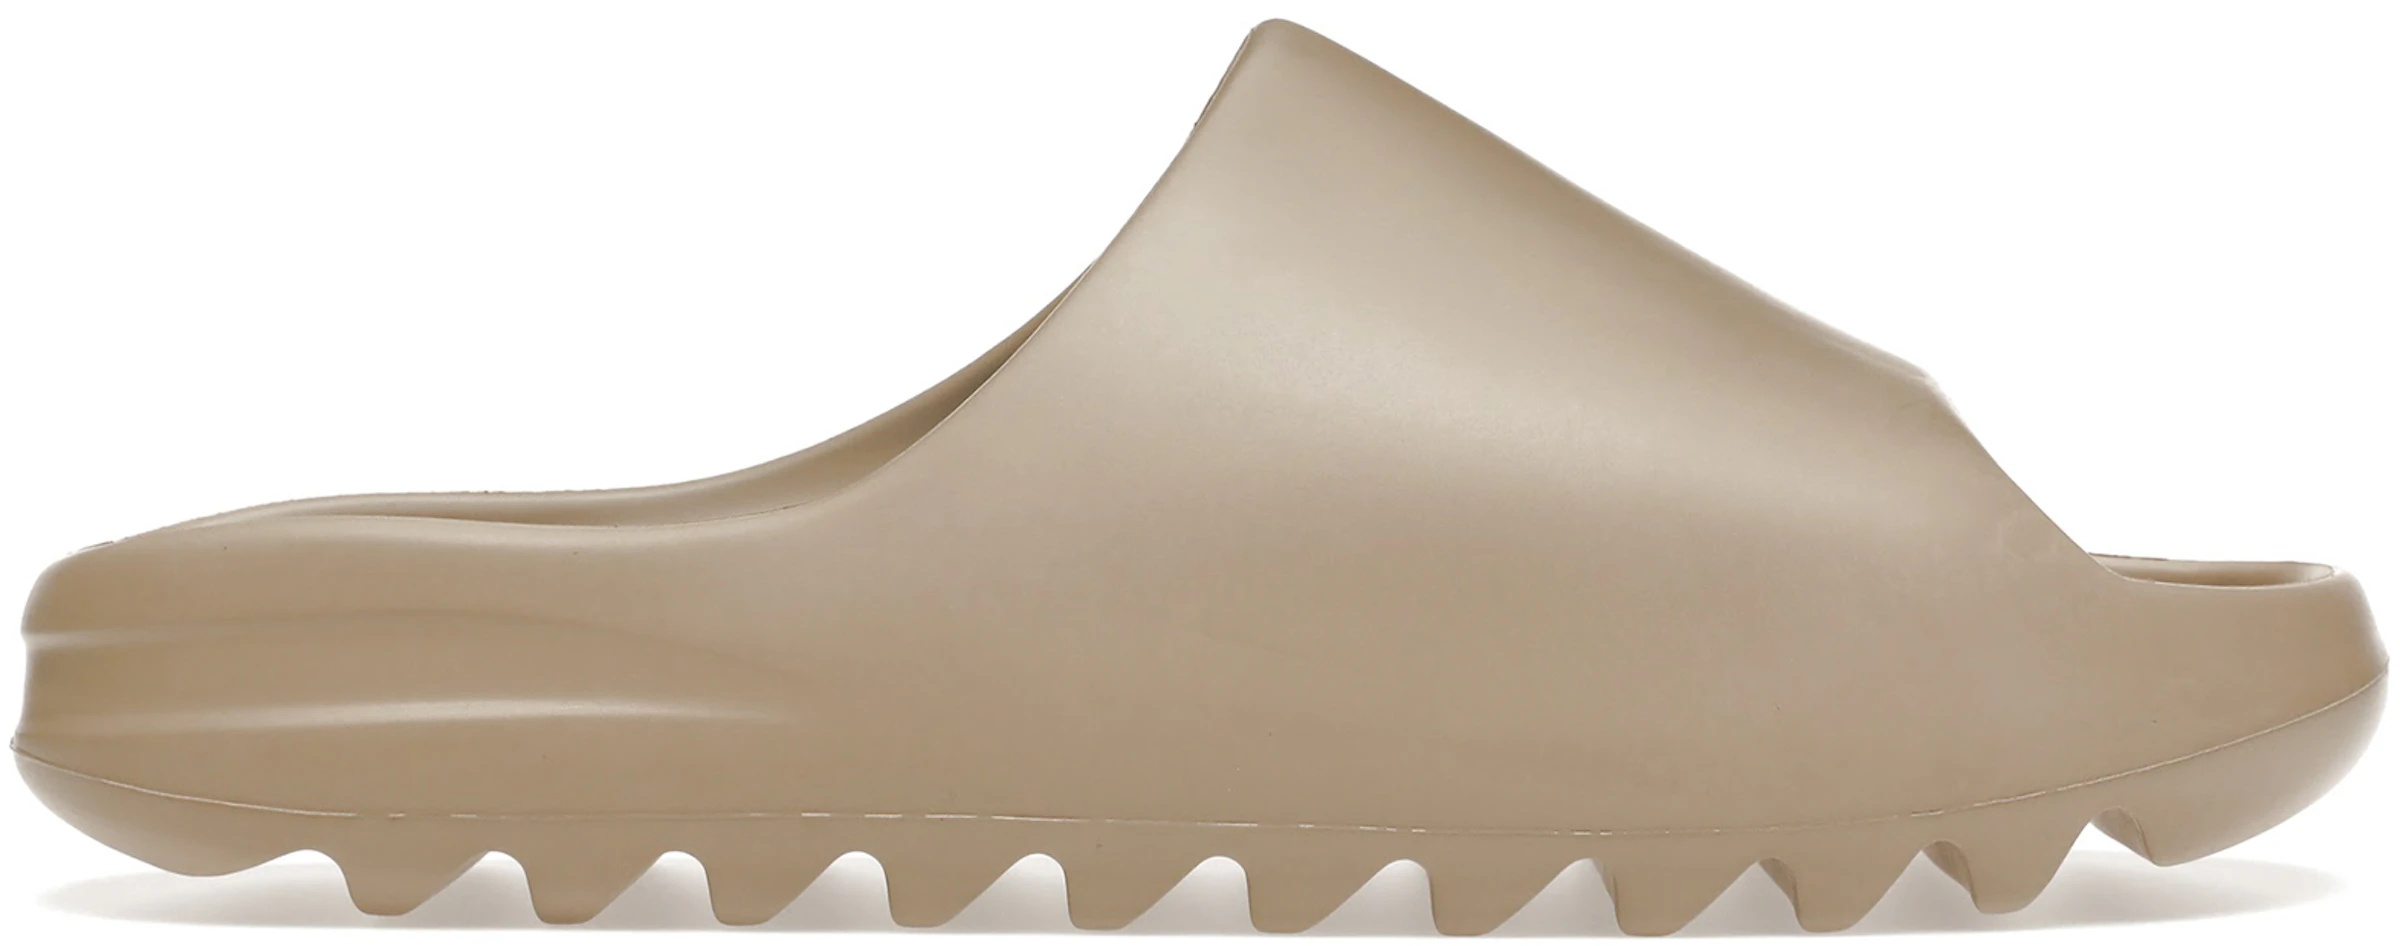 la carretera Aflojar Limpiamente adidas Yeezy Slide Pure (First Release) - GZ5554 - US